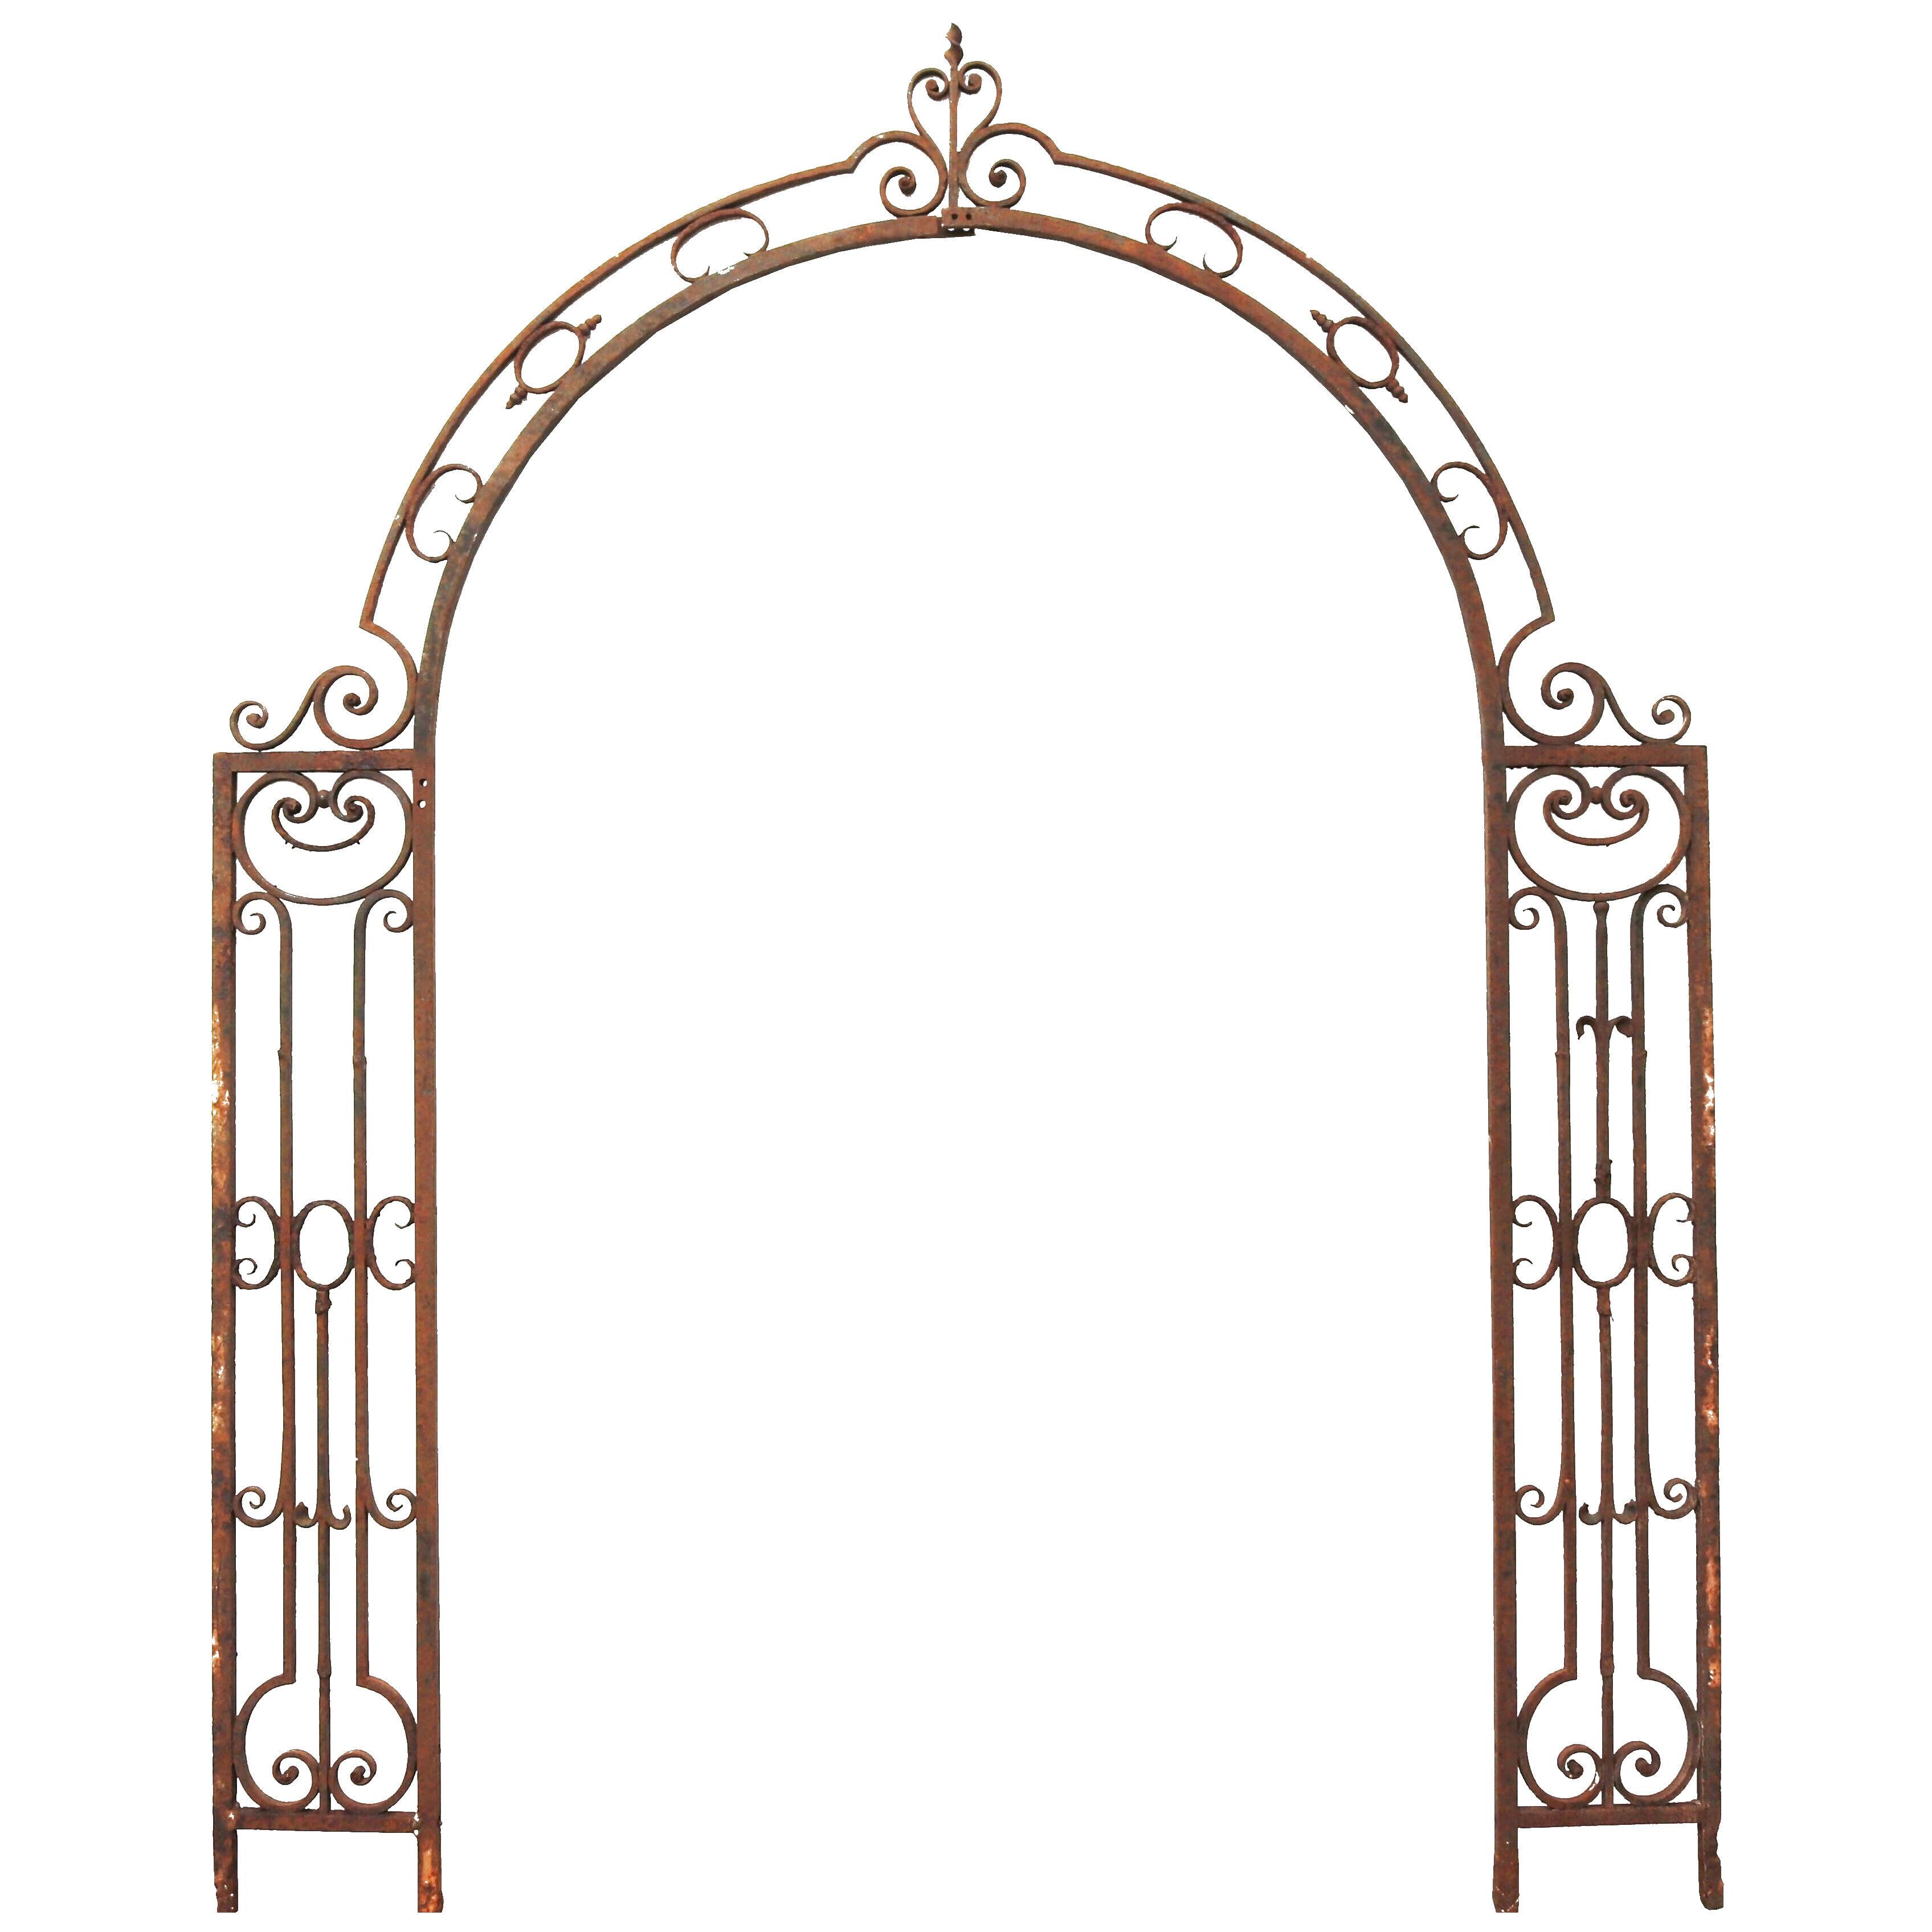 Georgian Wrought Iron Garden Archway